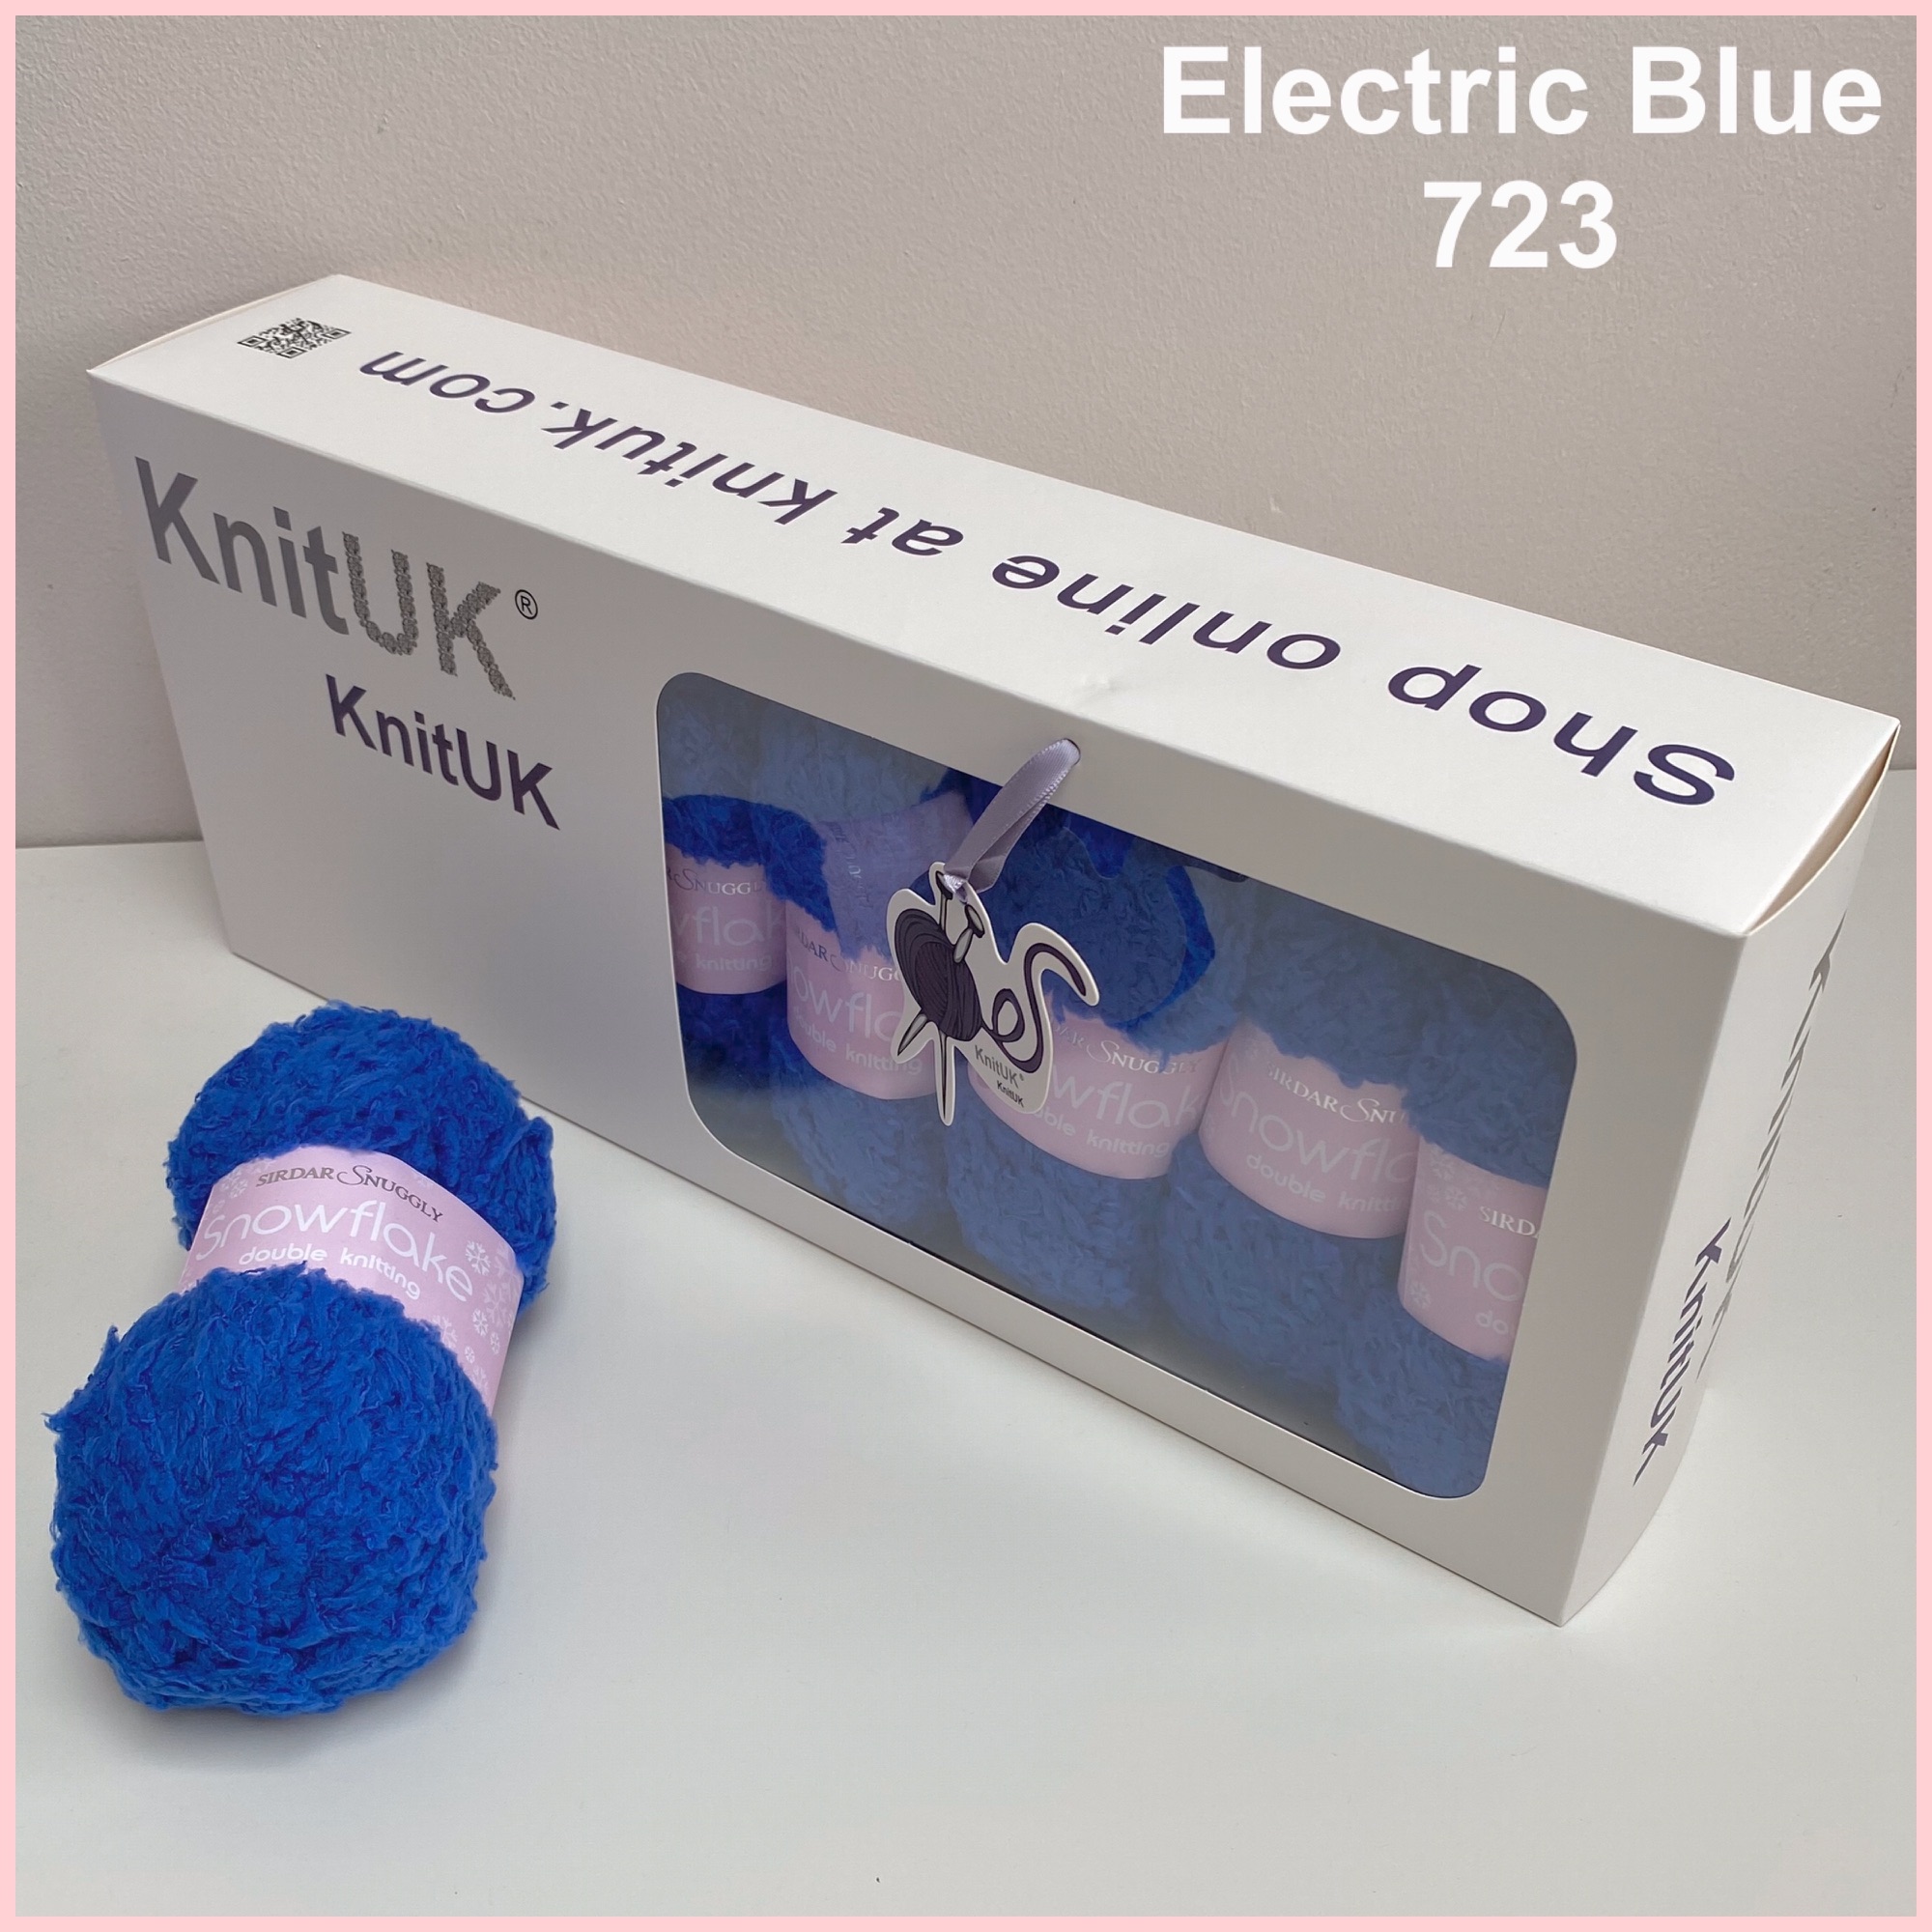 Sirdar snowflake dk electric blue knituk box